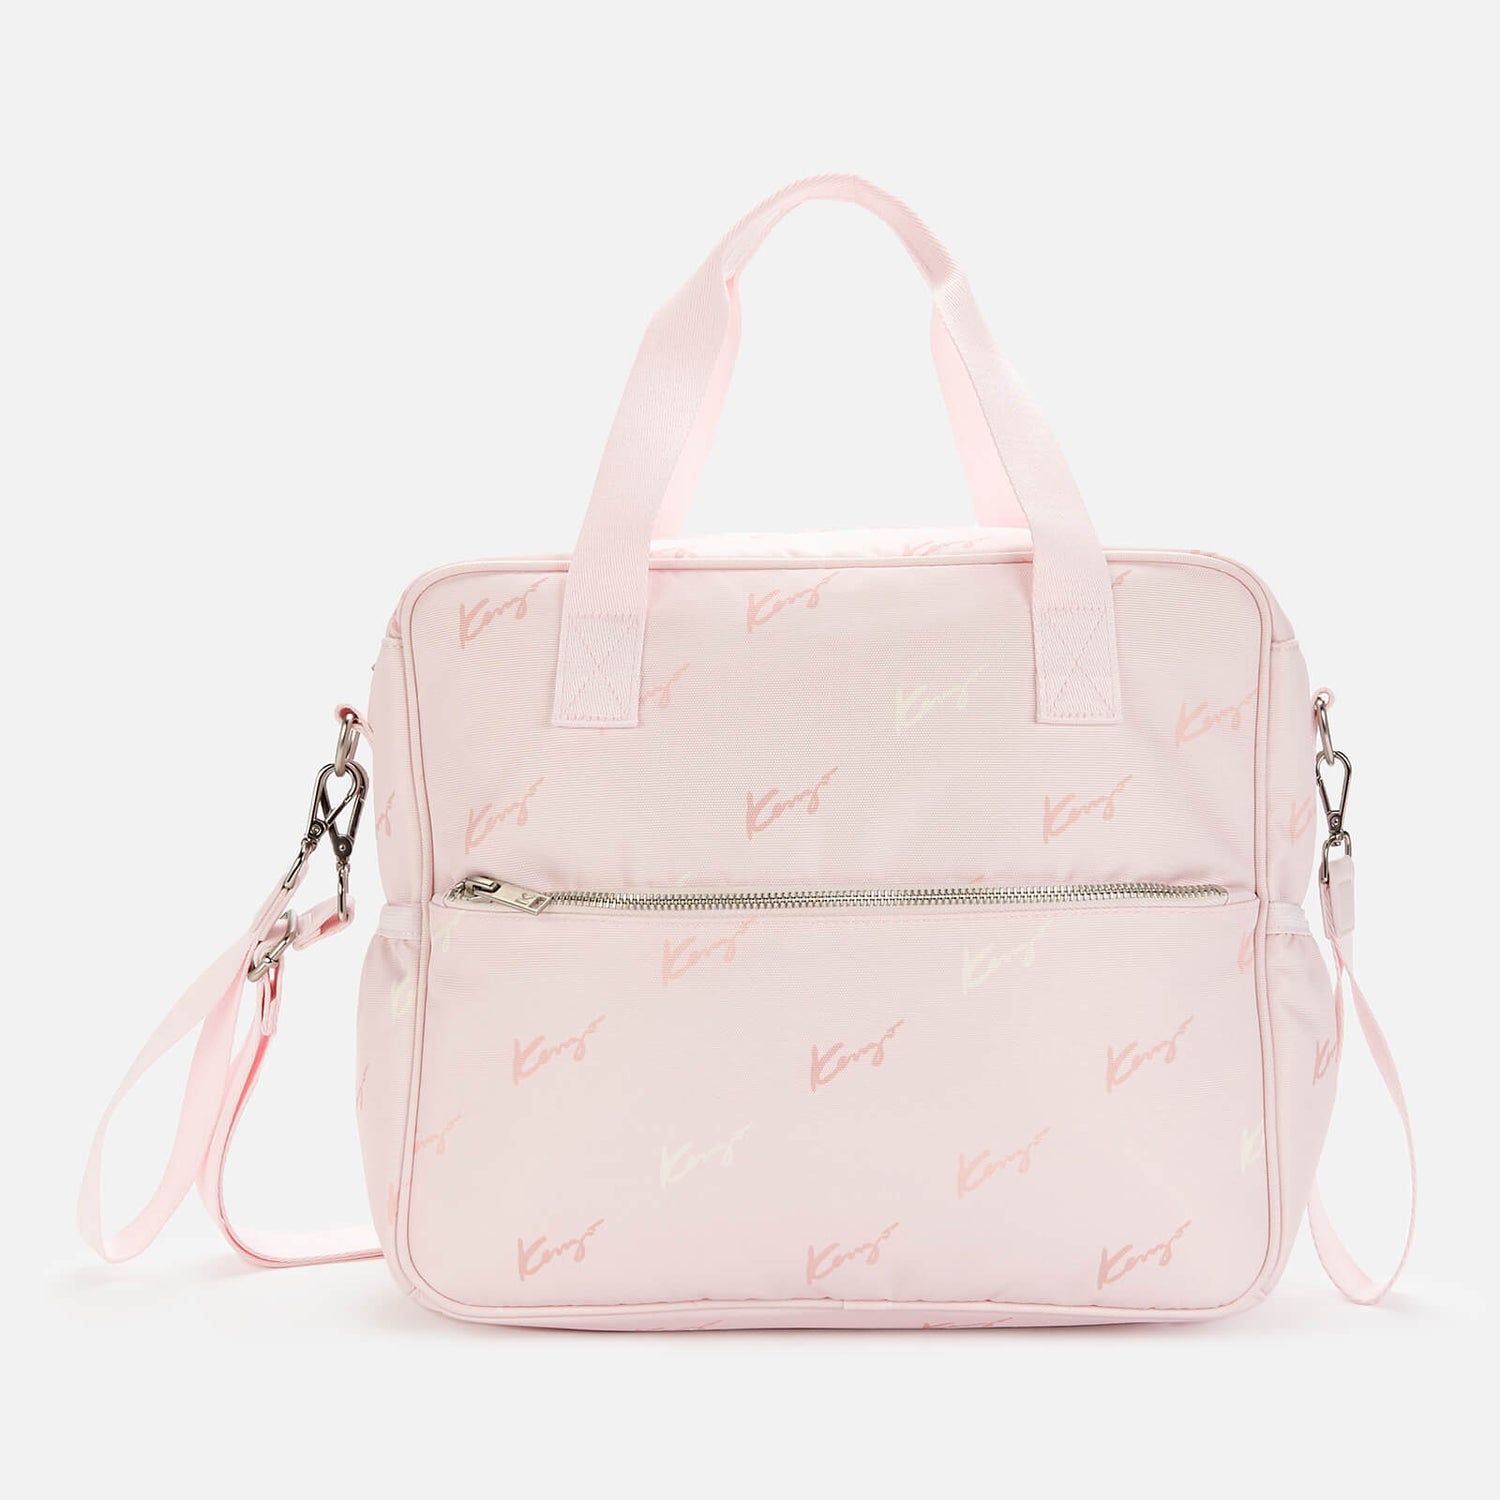 KENZO Newborn Changing Bag - Pale Pink - One Size